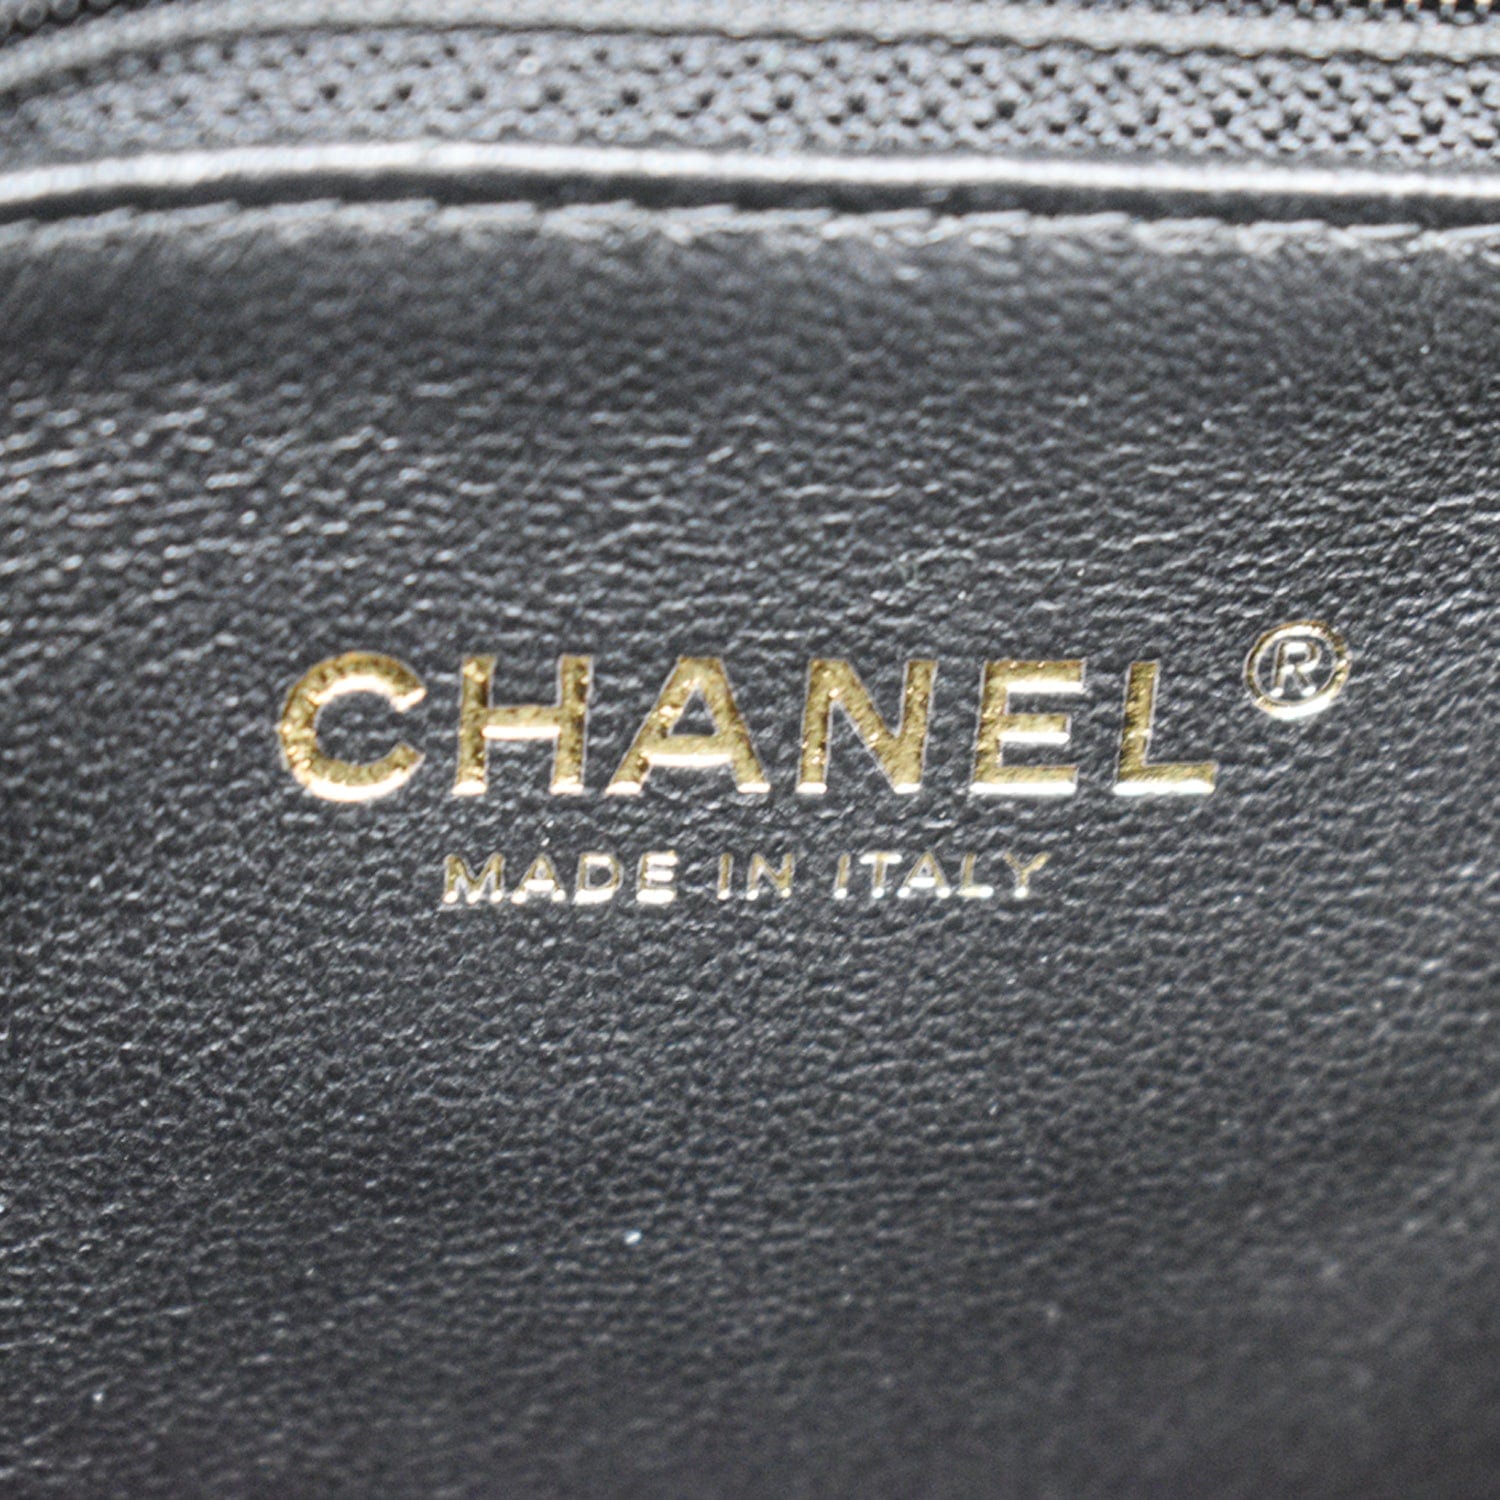 Chanel splash bag coming in handy 💅😌 #chanel #monaco